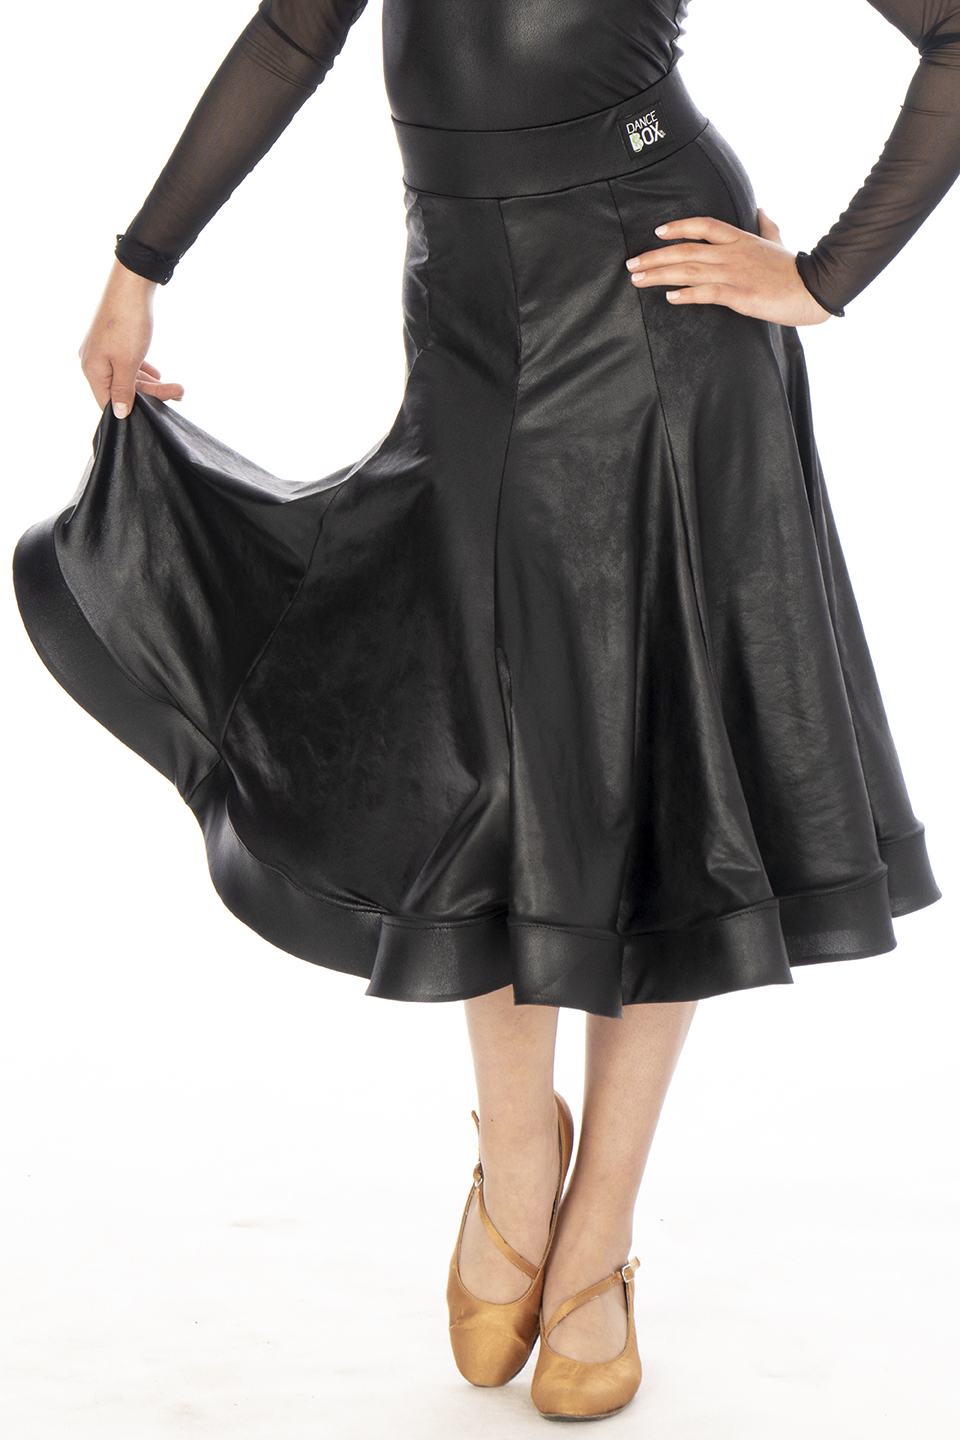 Rihanna Soft Leather Ballroom Skirt Black / G20120016-01 | DANCEBOX